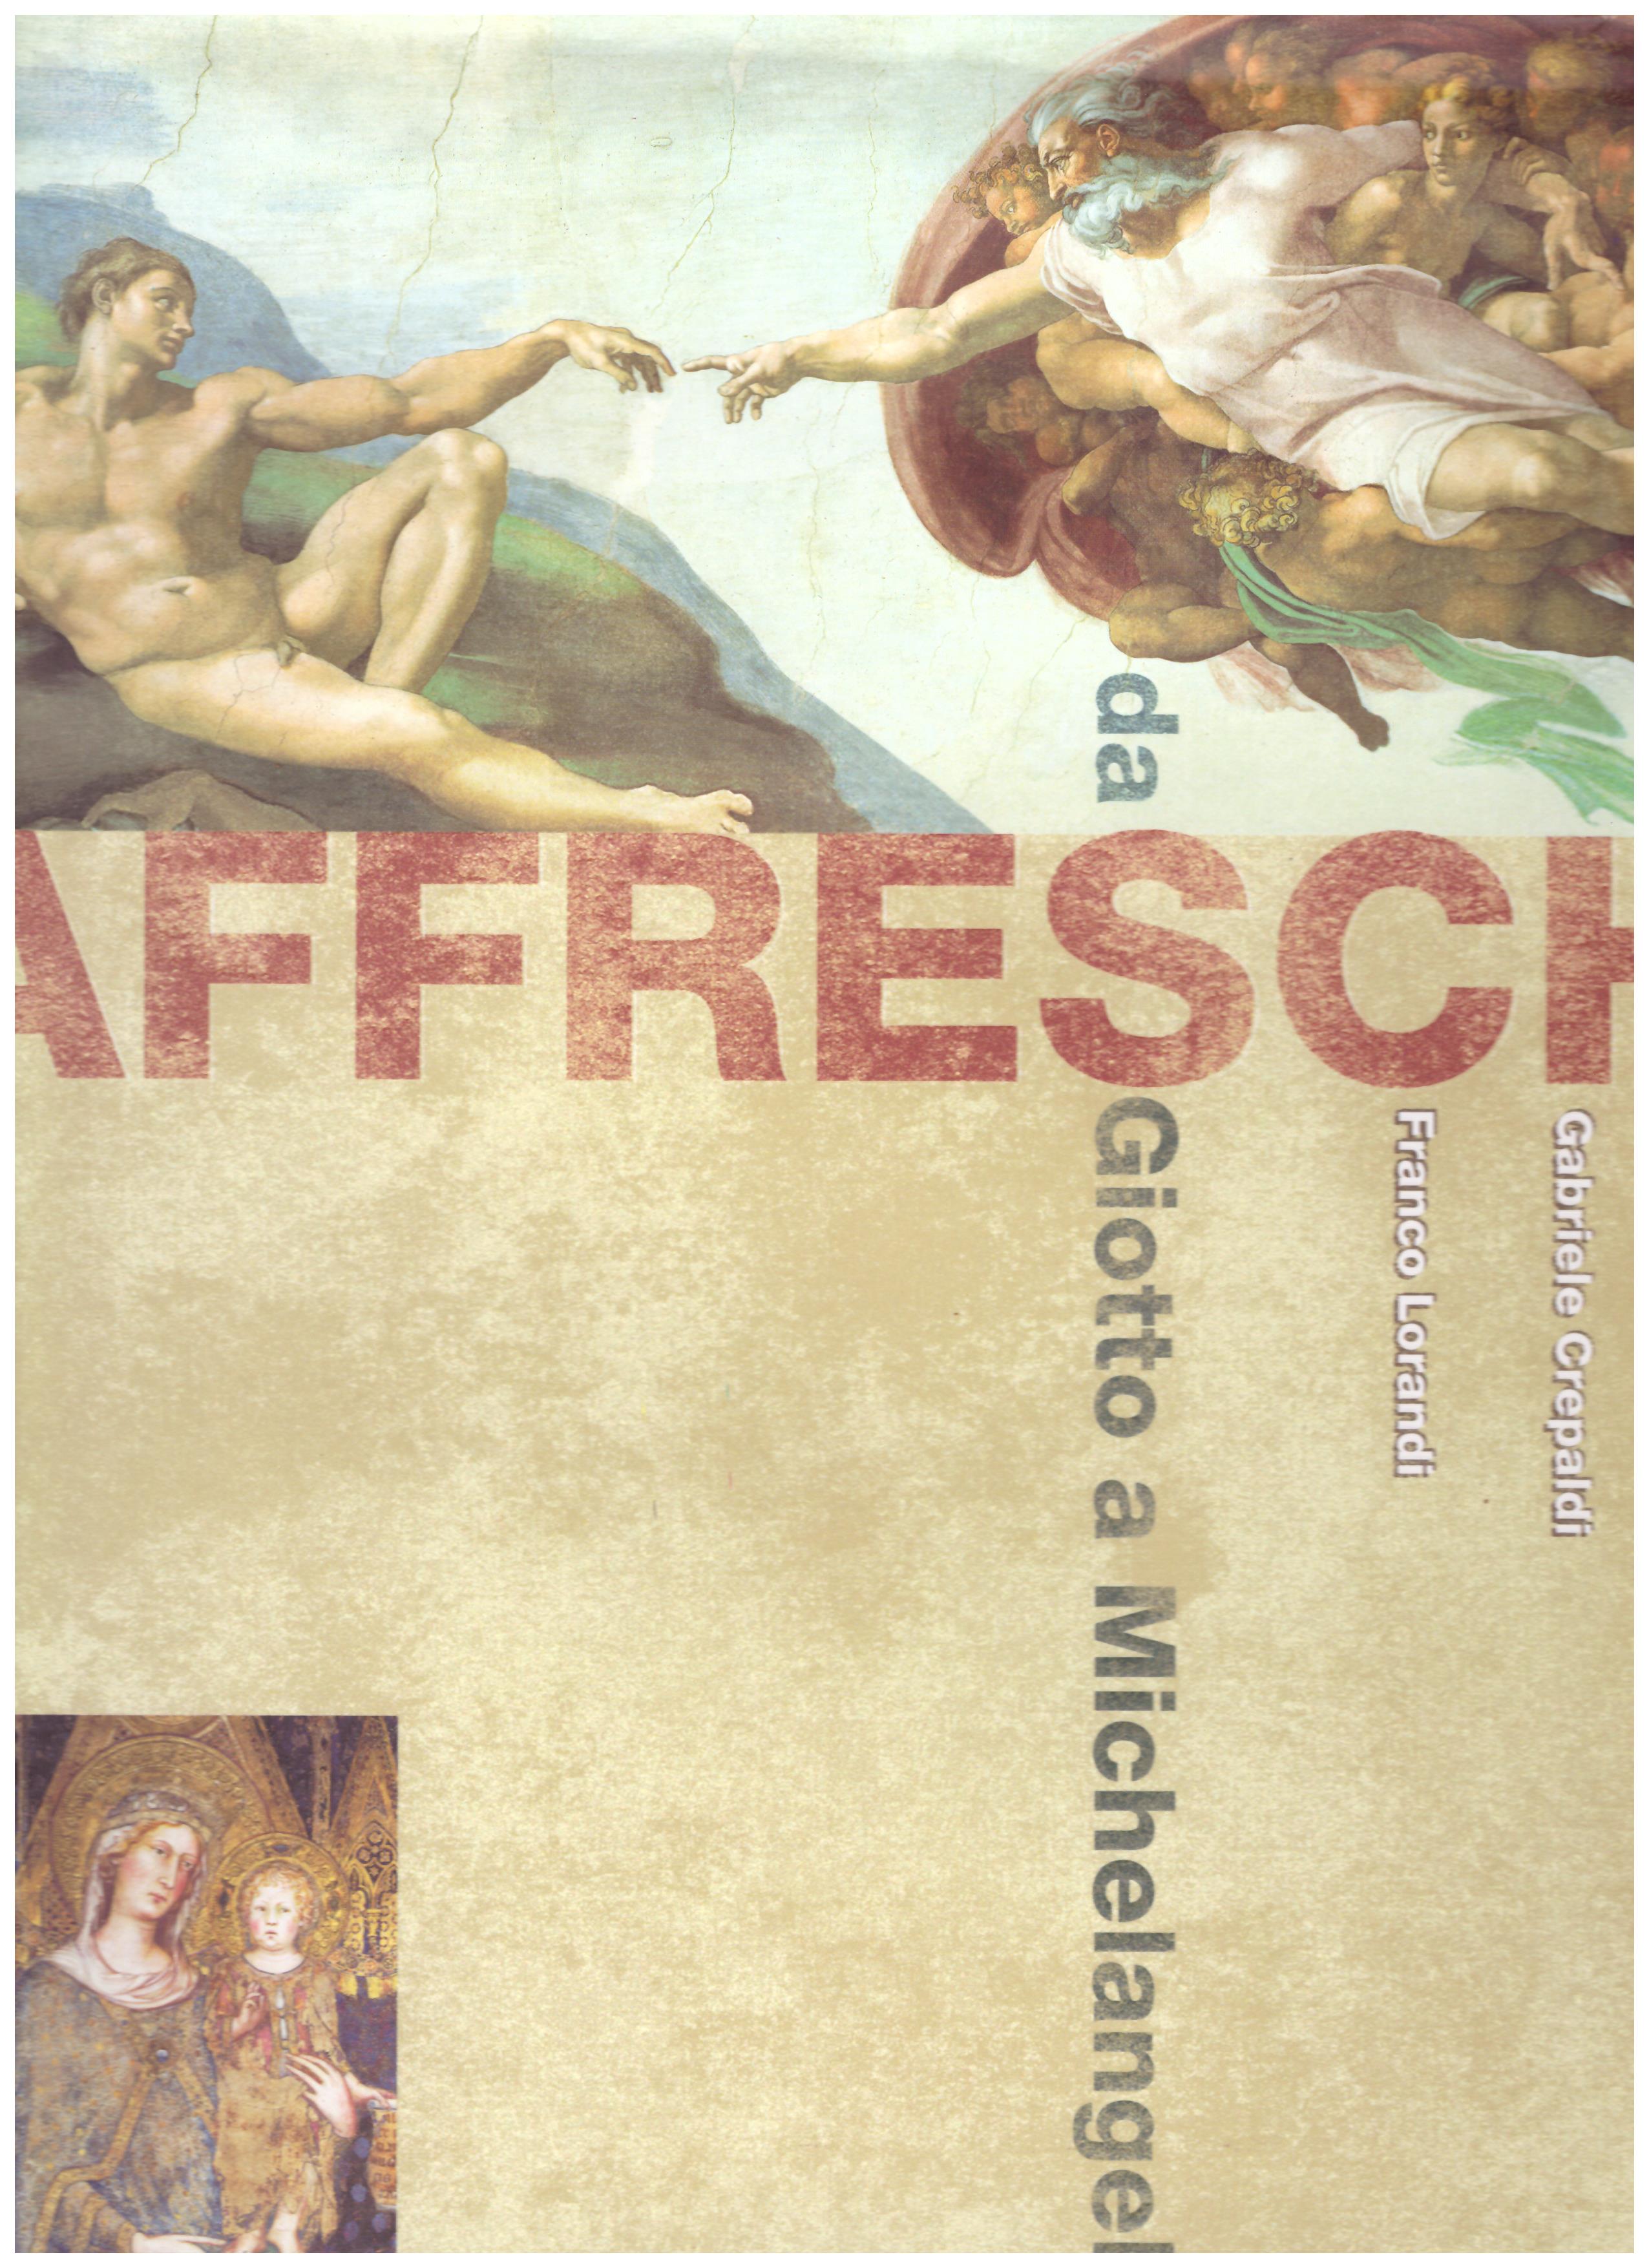 Affreschi da Giotto a Michelangelo